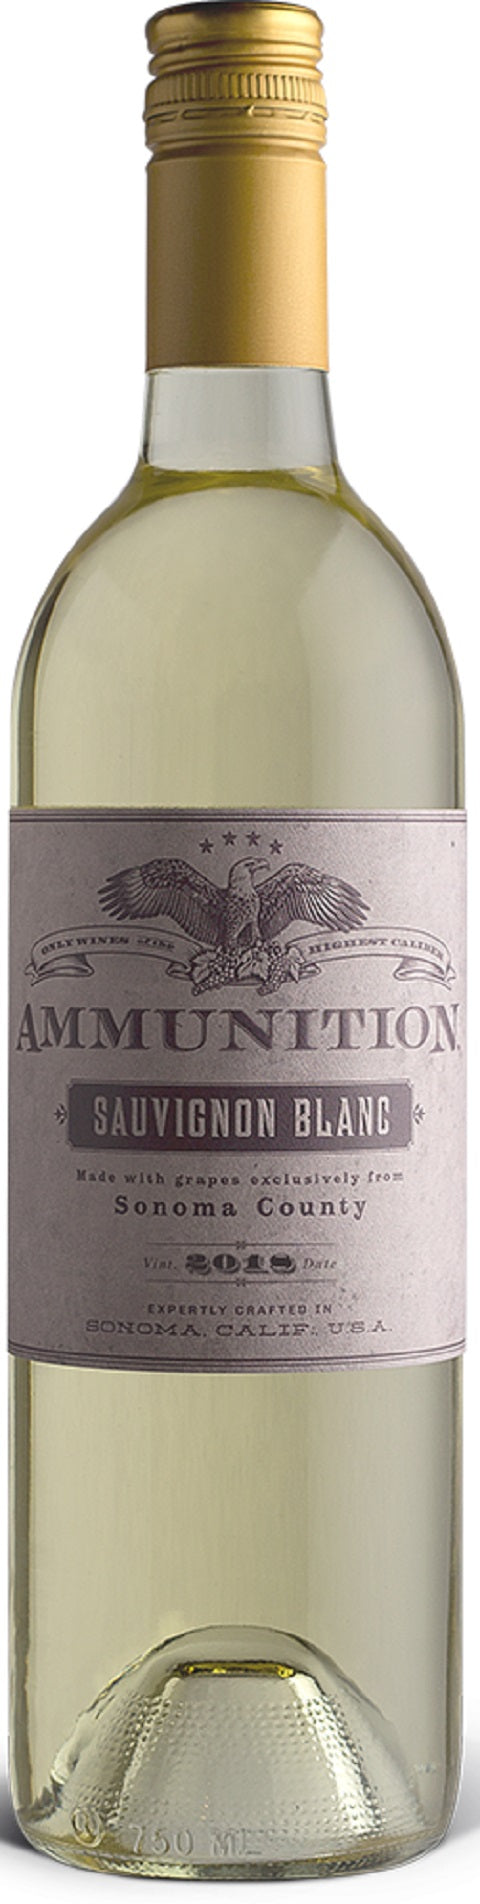 Ammunition Sauvignon Blanc 2017